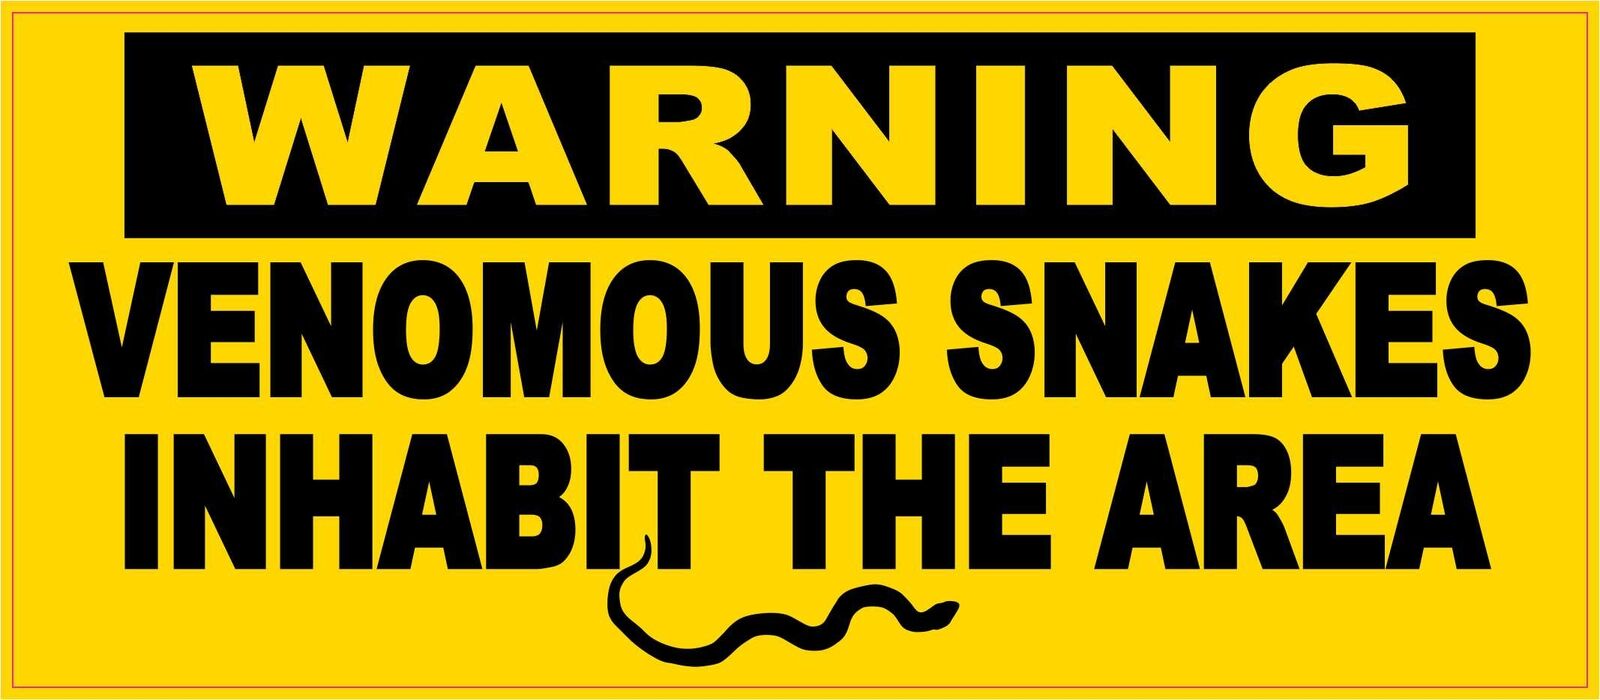 7in x 3in Venomous Snakes Inhabit the Area Vinyl Sticker Animal Sign Decal